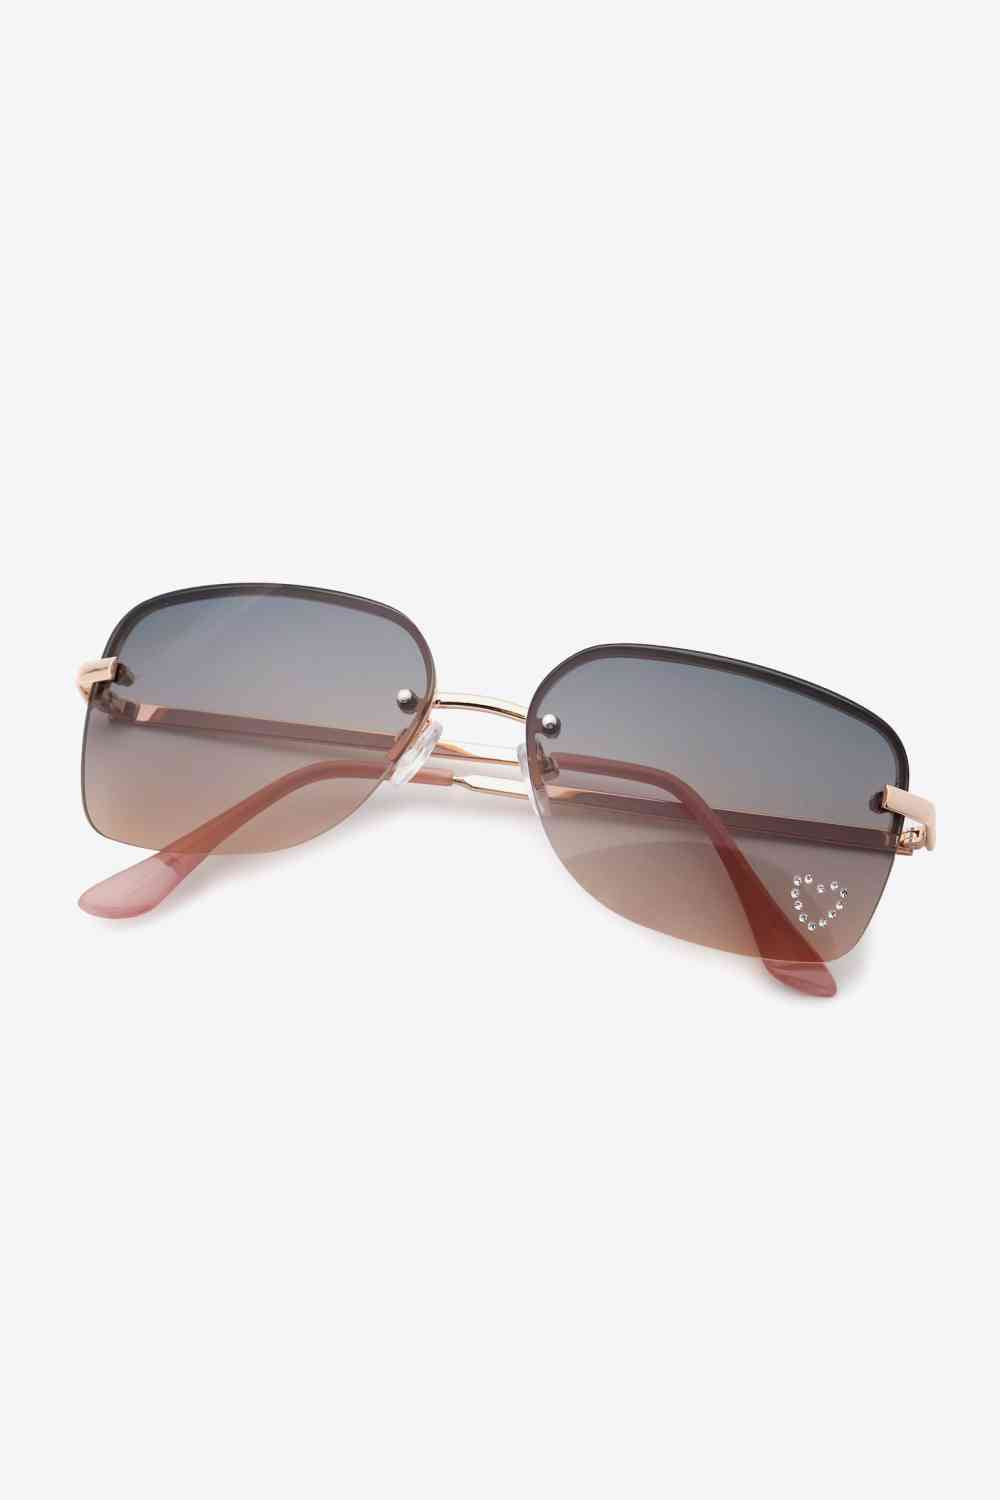 Rhinestone Heart Metal Frame Sunglasses Pale Blush One Size